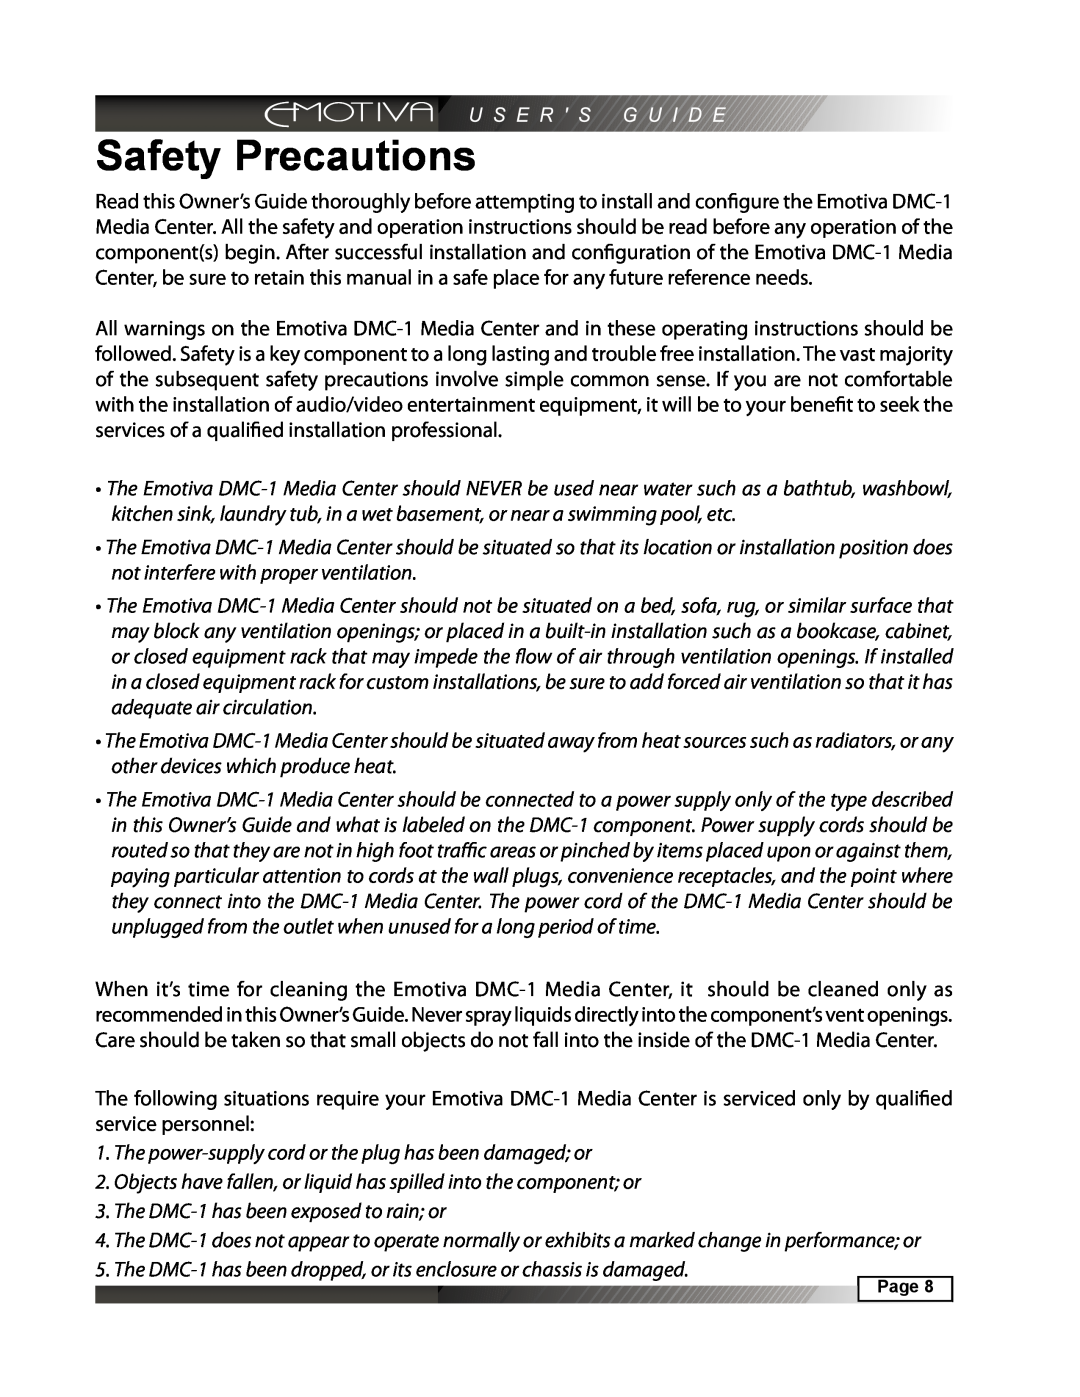 Emotiva DMC-1 manual Safety Precautions 